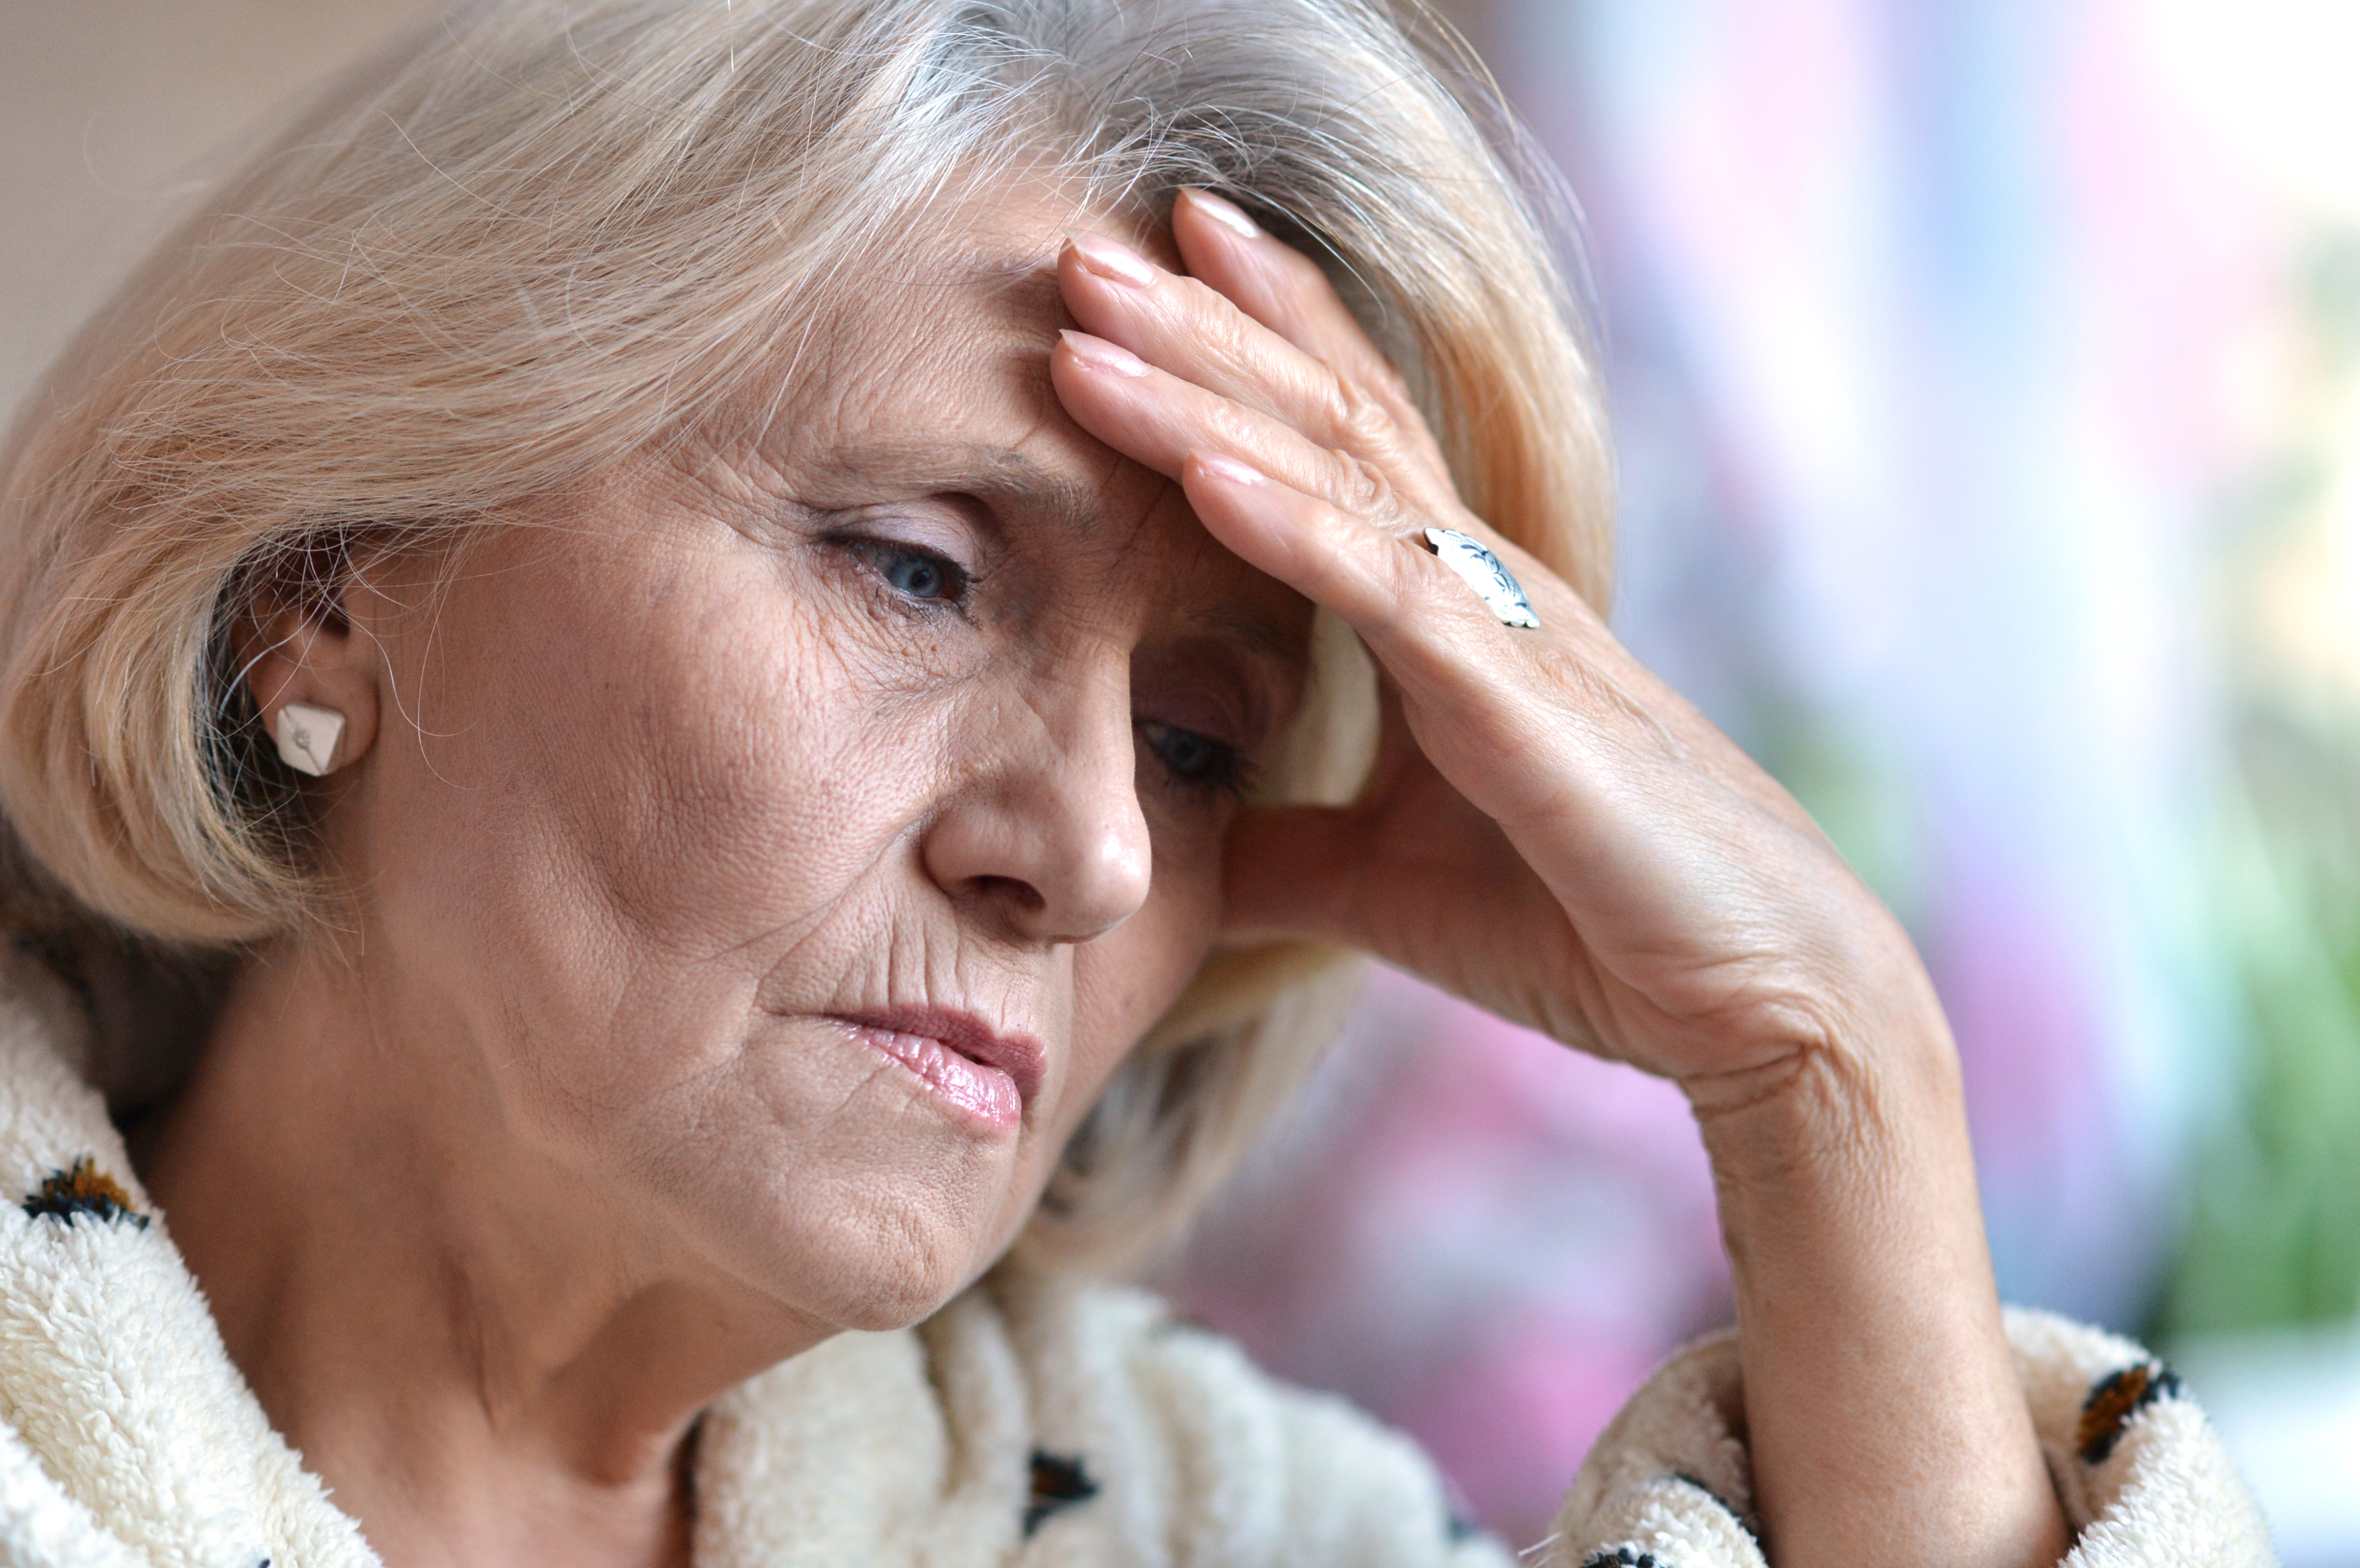 Sad elderly woman sitting in a room | Source: Shutterstock